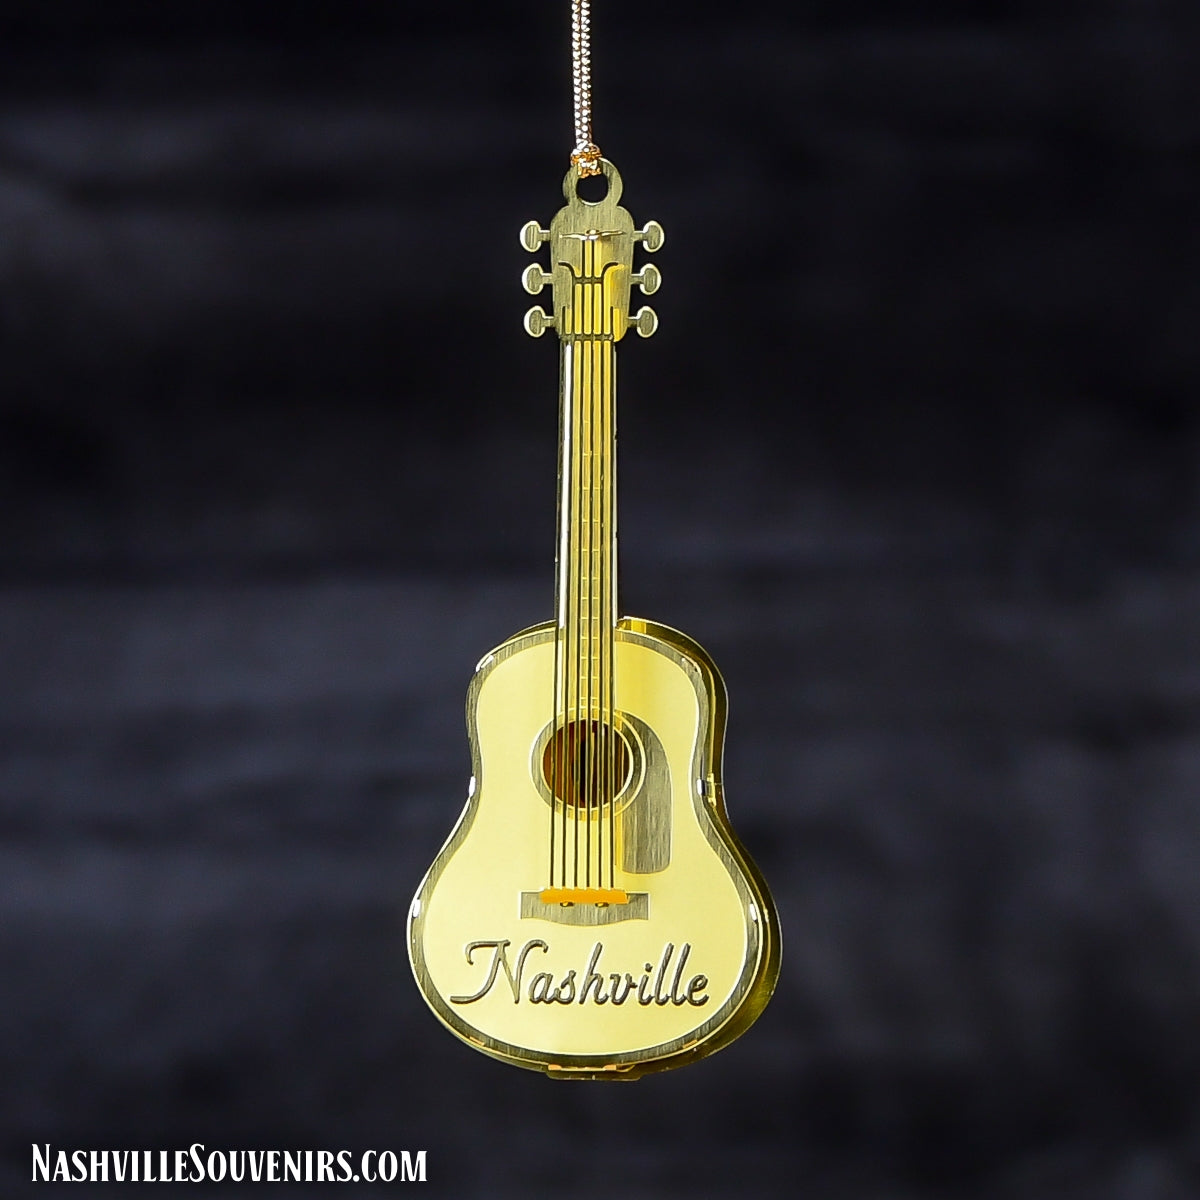 3D Brass Collectible Nashville Guitar Ornament